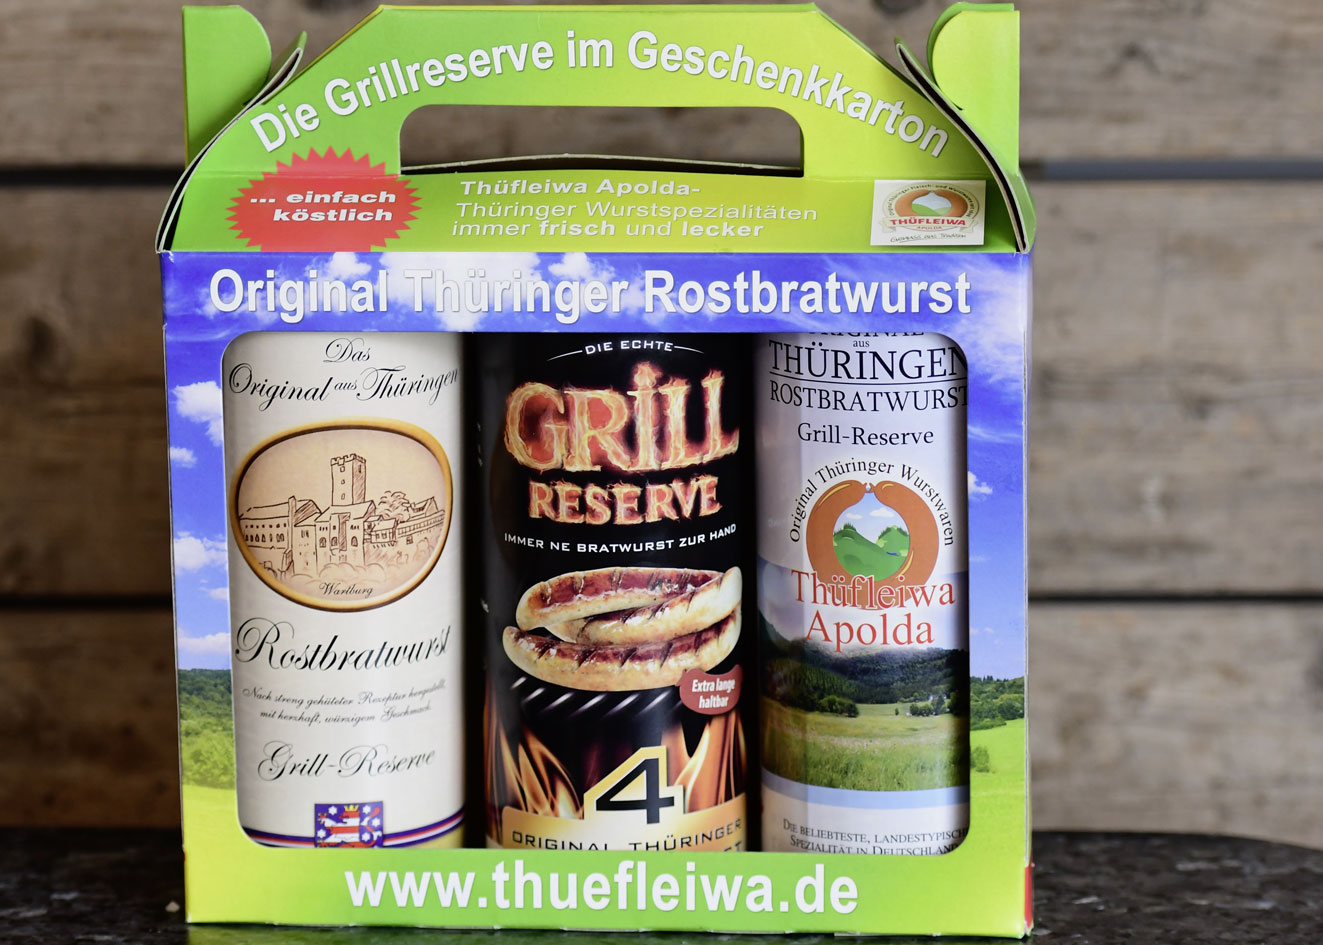 3 Dosen Original Thüringer Rostbratwurst in Geschenkpackung